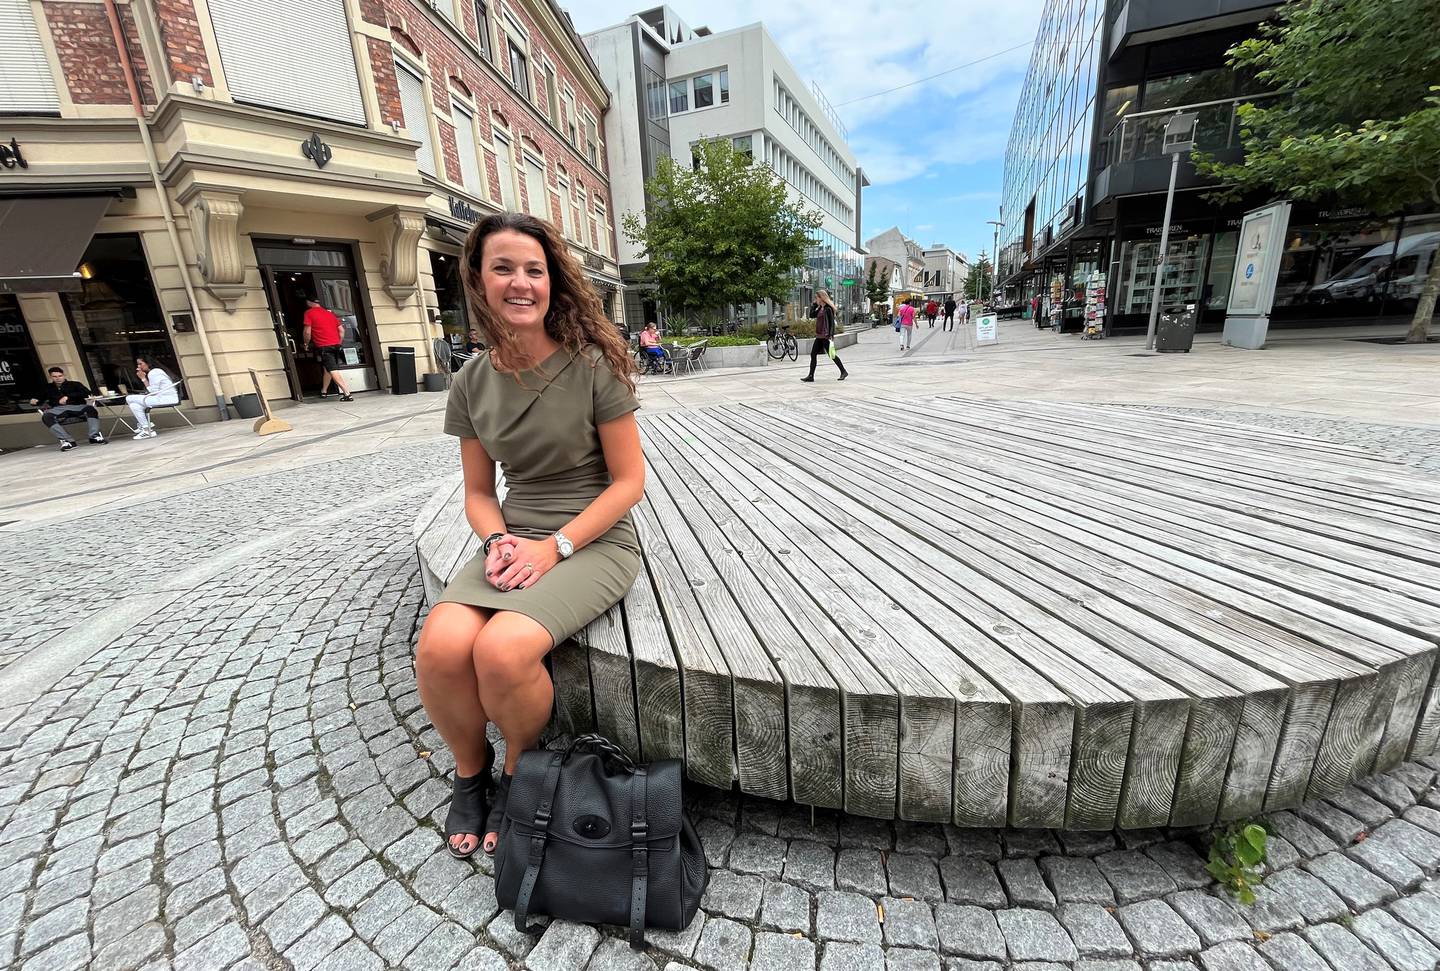 Fredrikstad er en by i en spennende utvikling, mener den nye sentrumslederen, Malin Carita Lind.